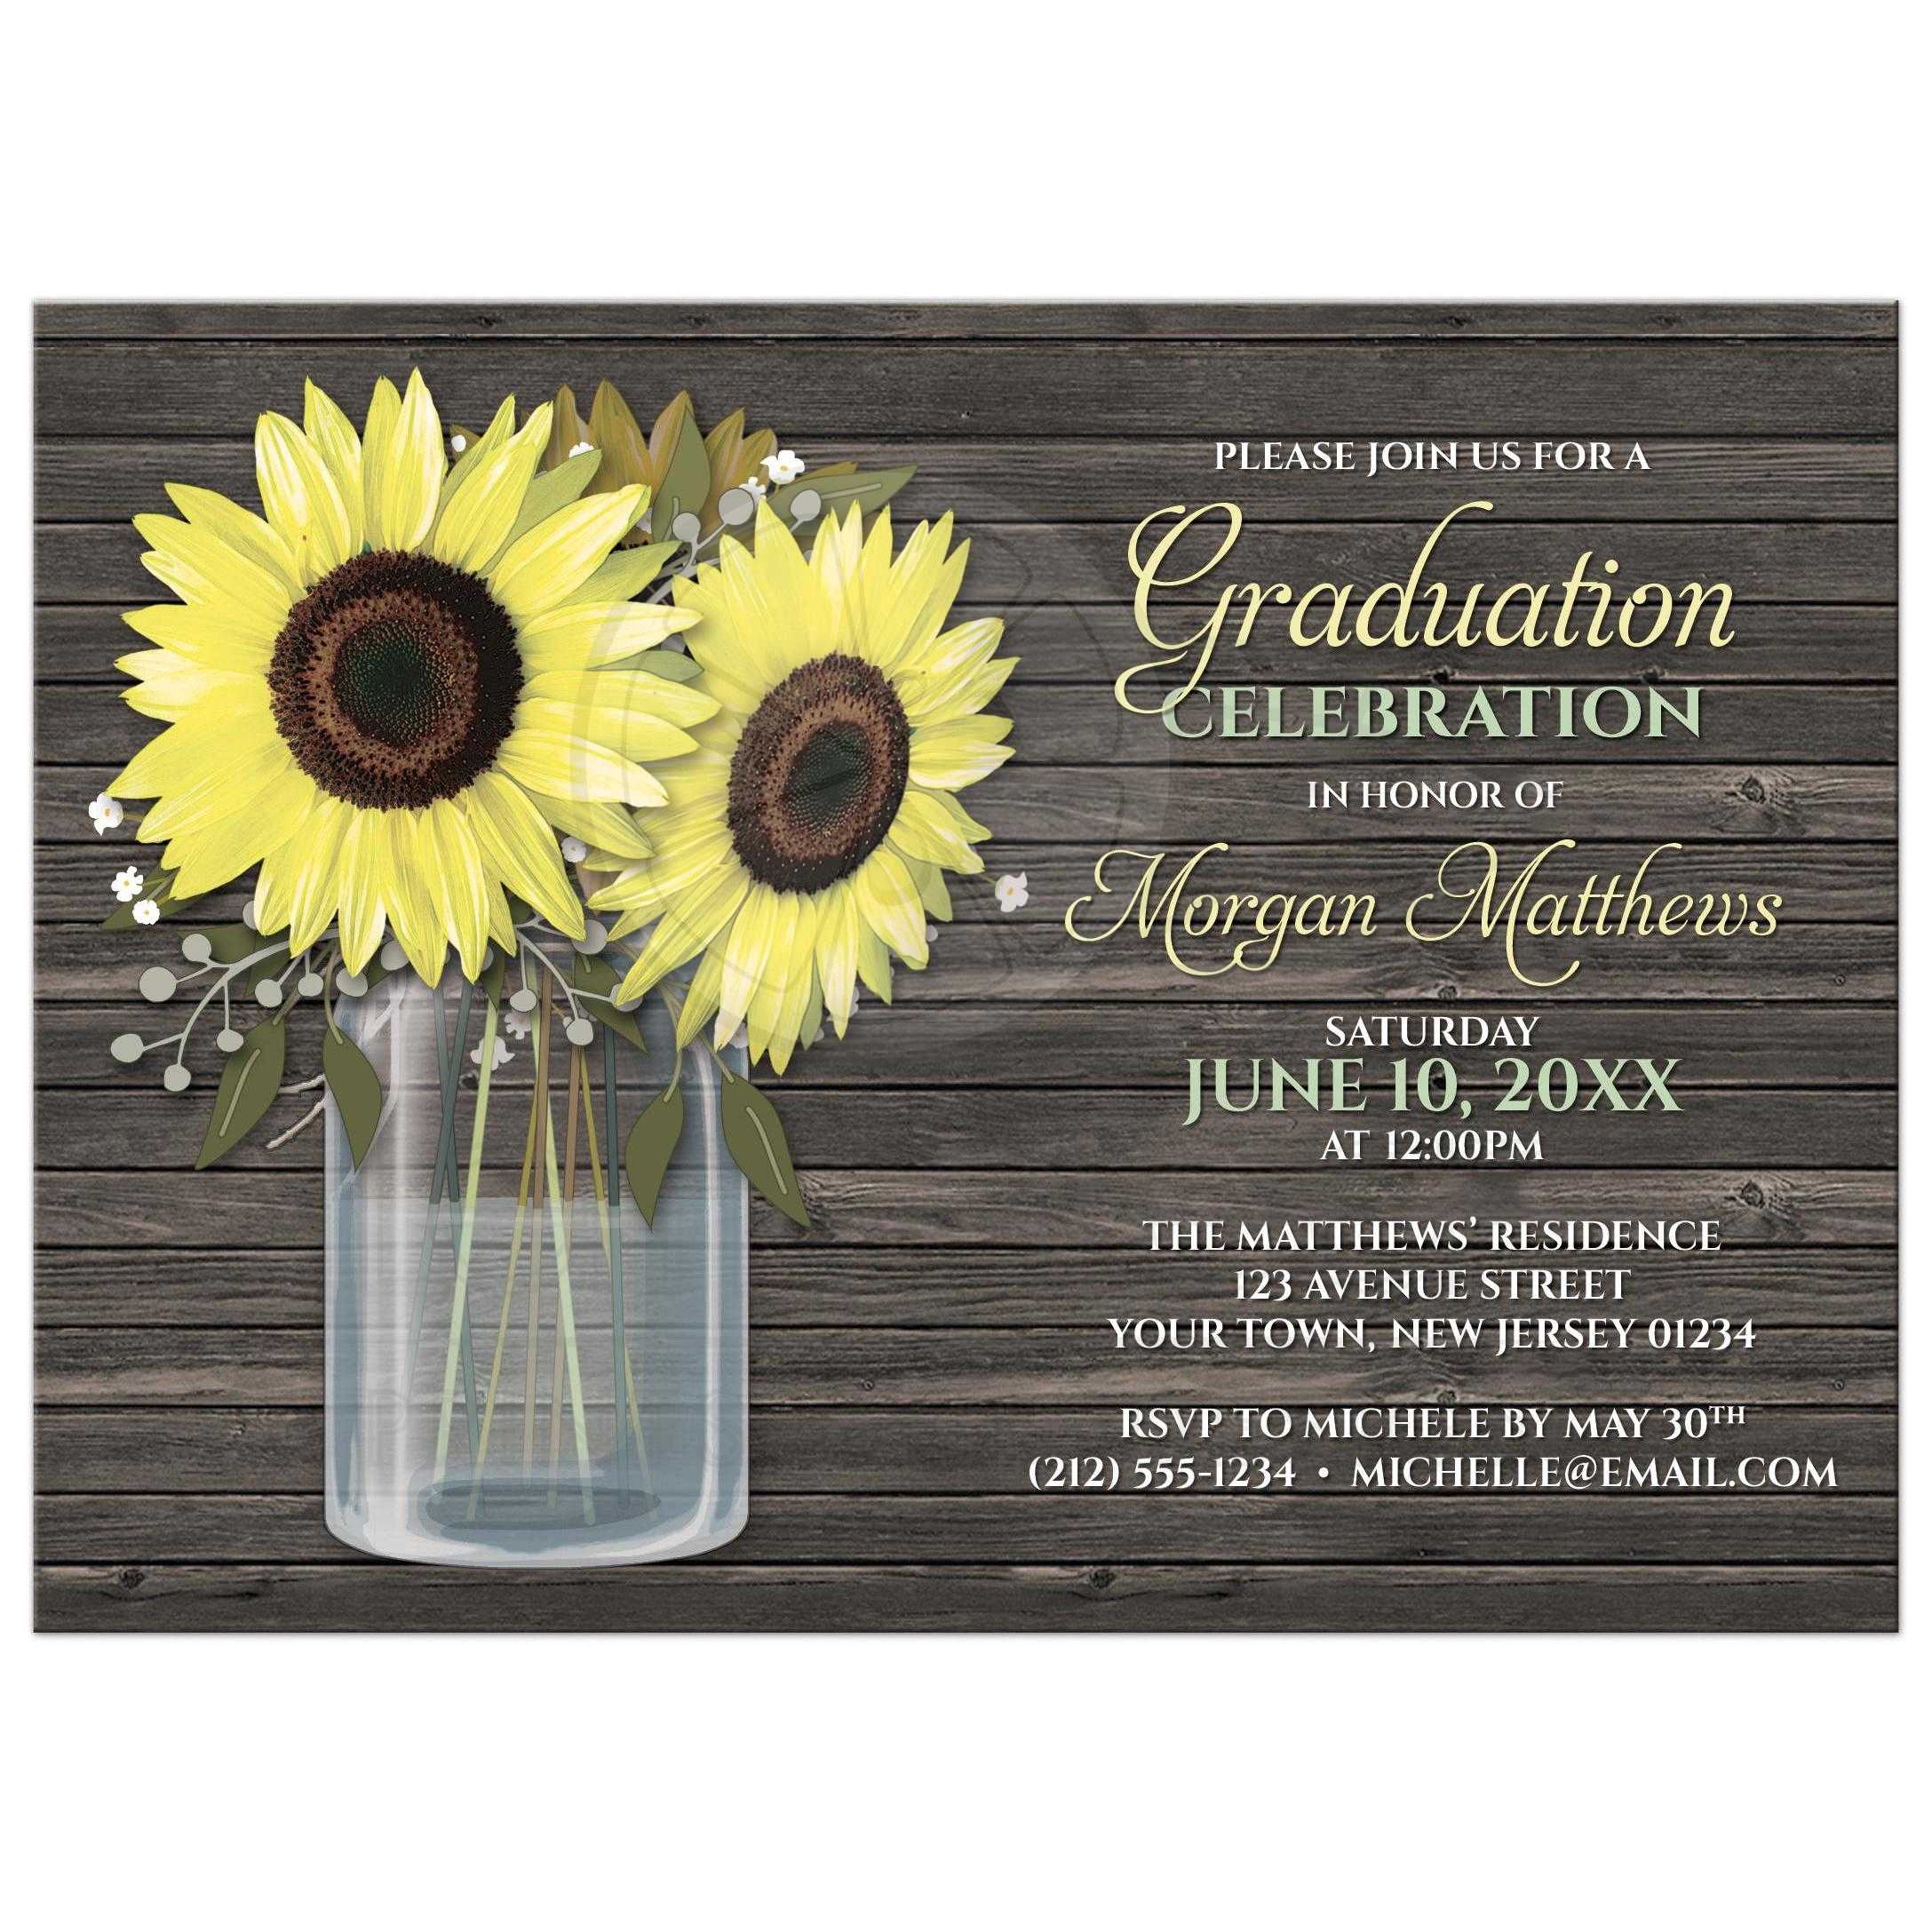 Graduation Invitations - Rustic Sunflower Wood Mason Jar